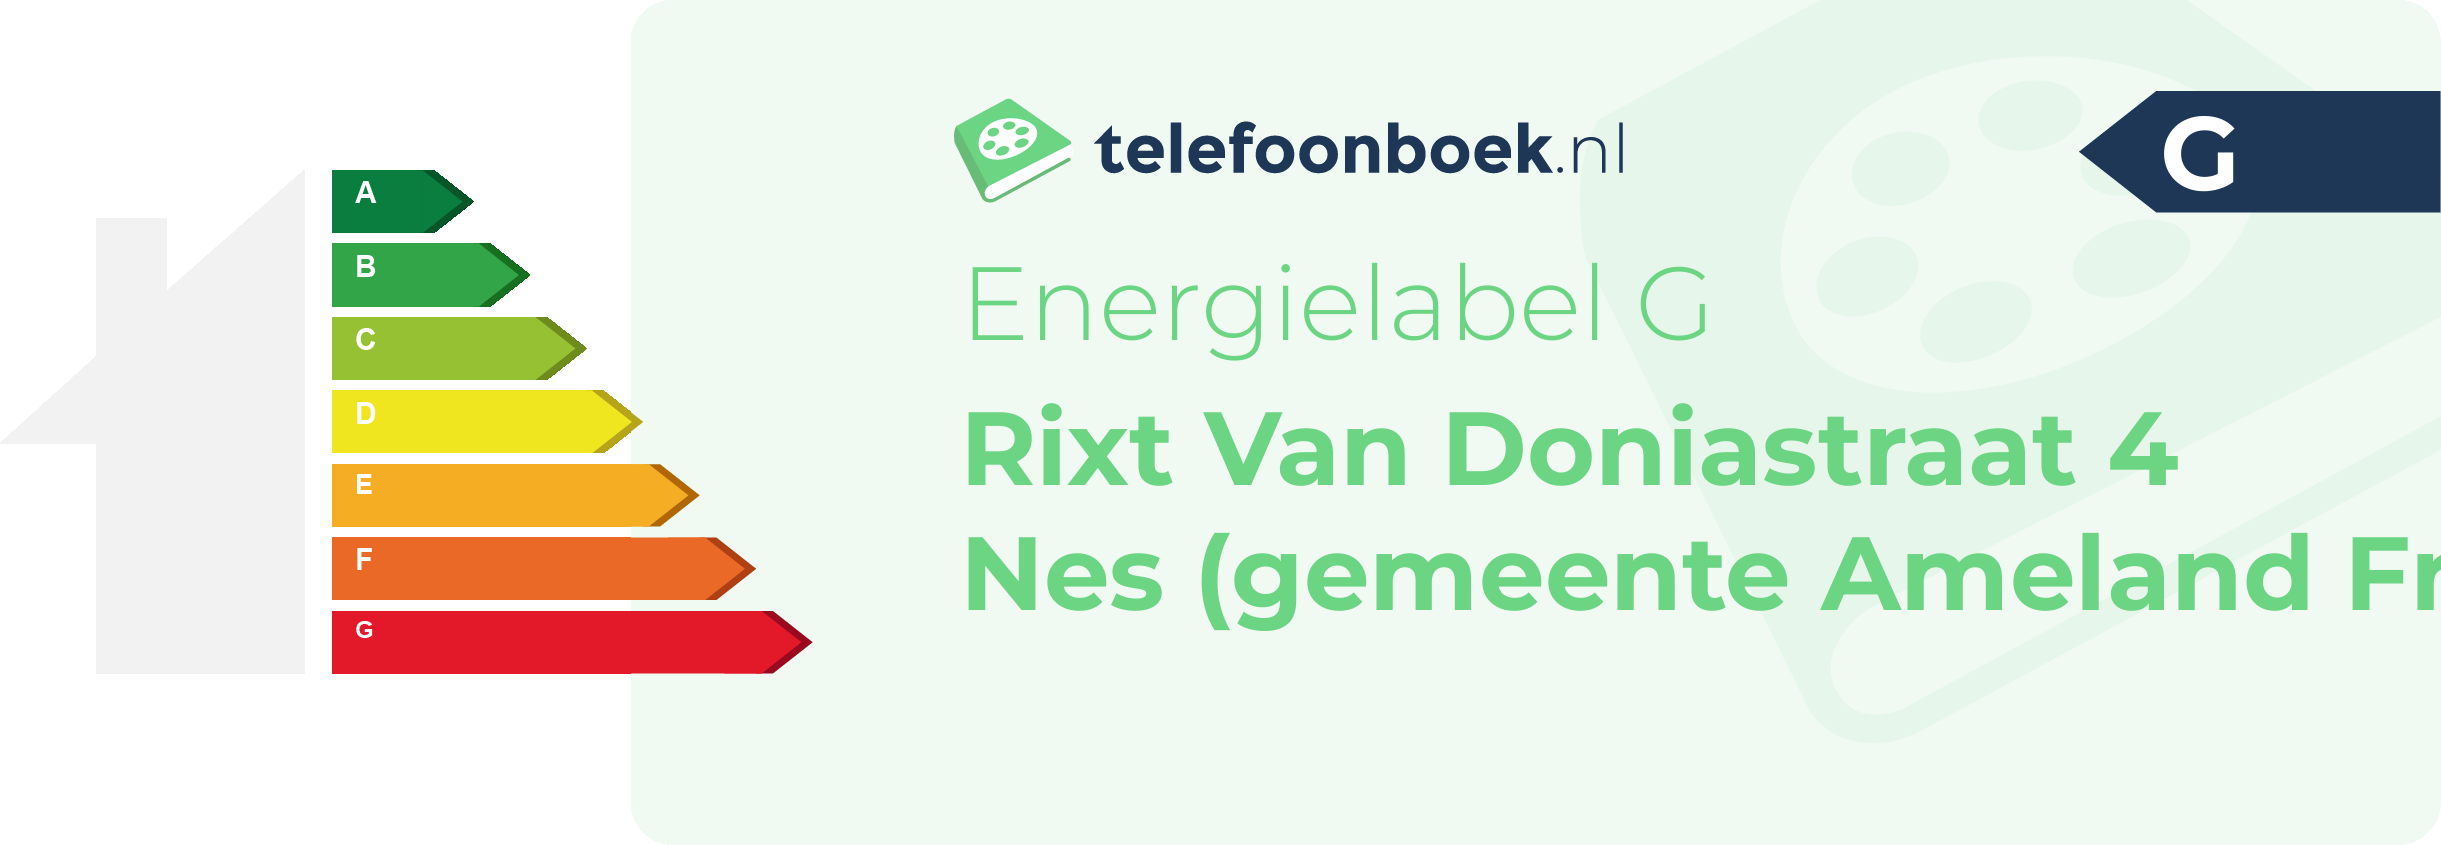 Energielabel Rixt Van Doniastraat 4 Nes (gemeente Ameland Friesland)